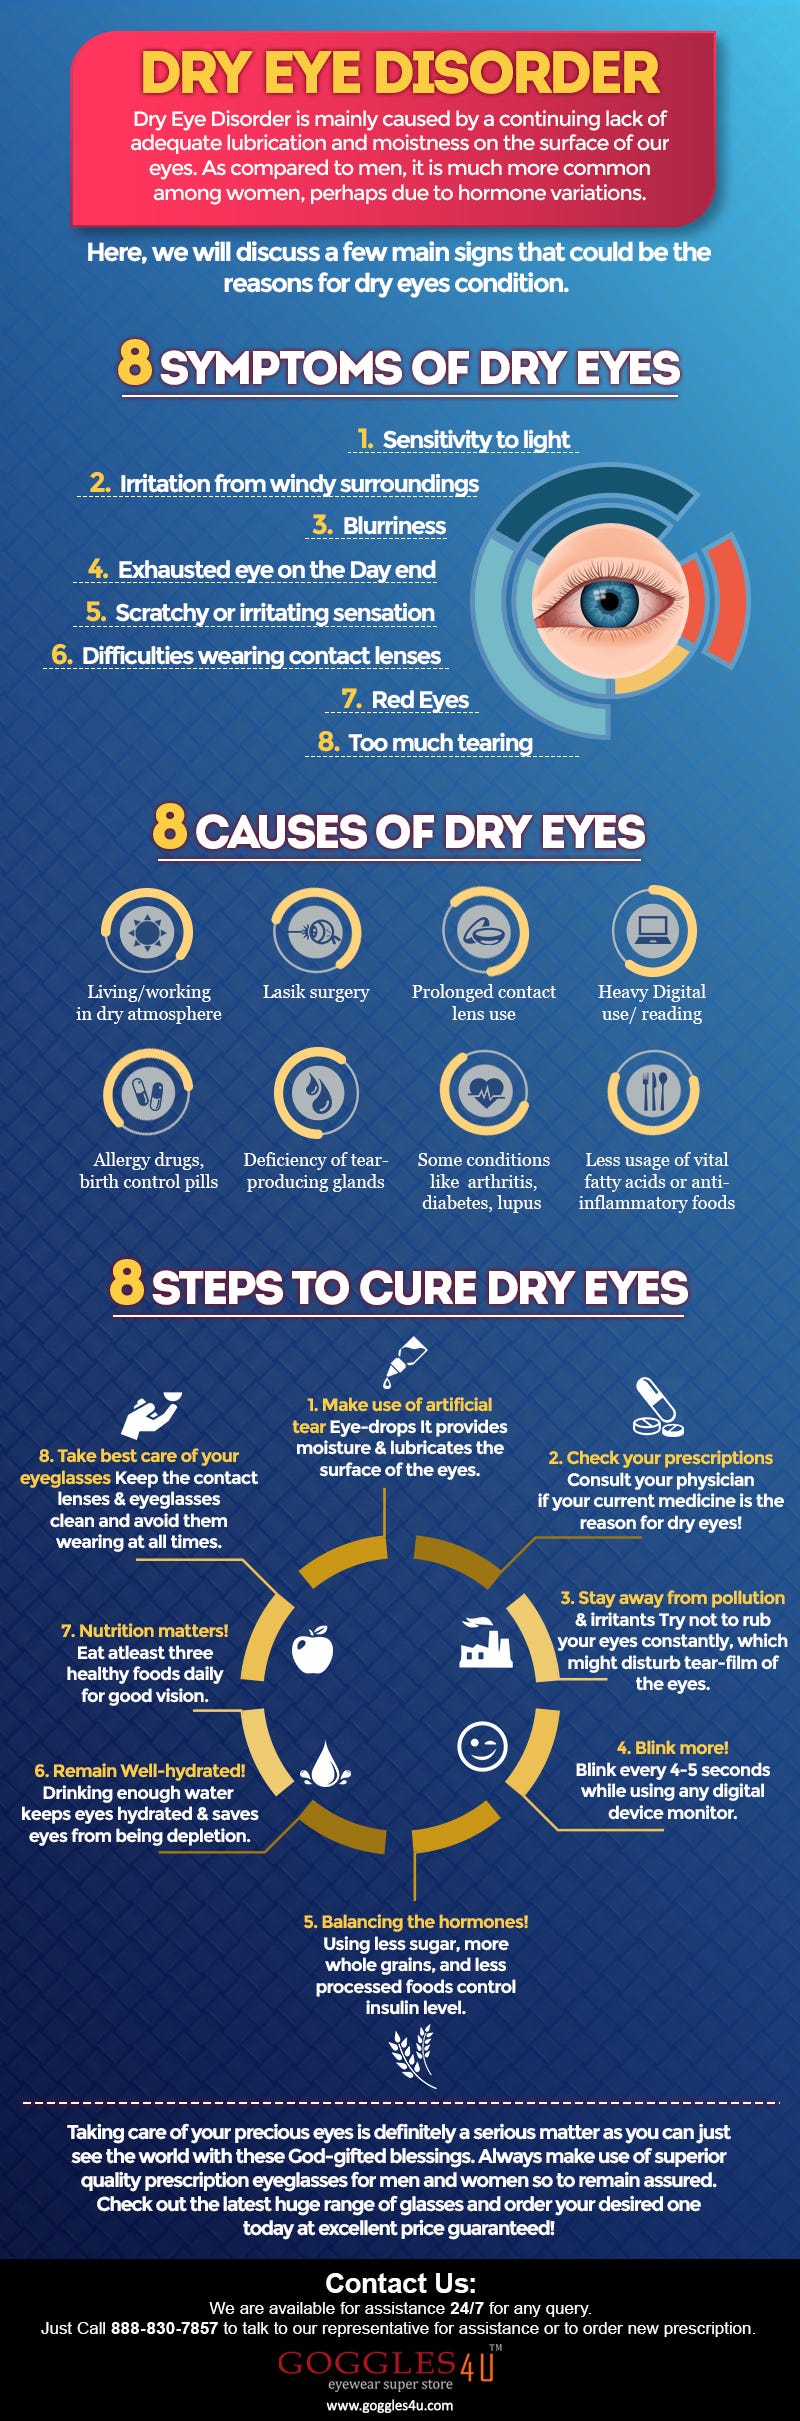 8 symptoms of dry eyes